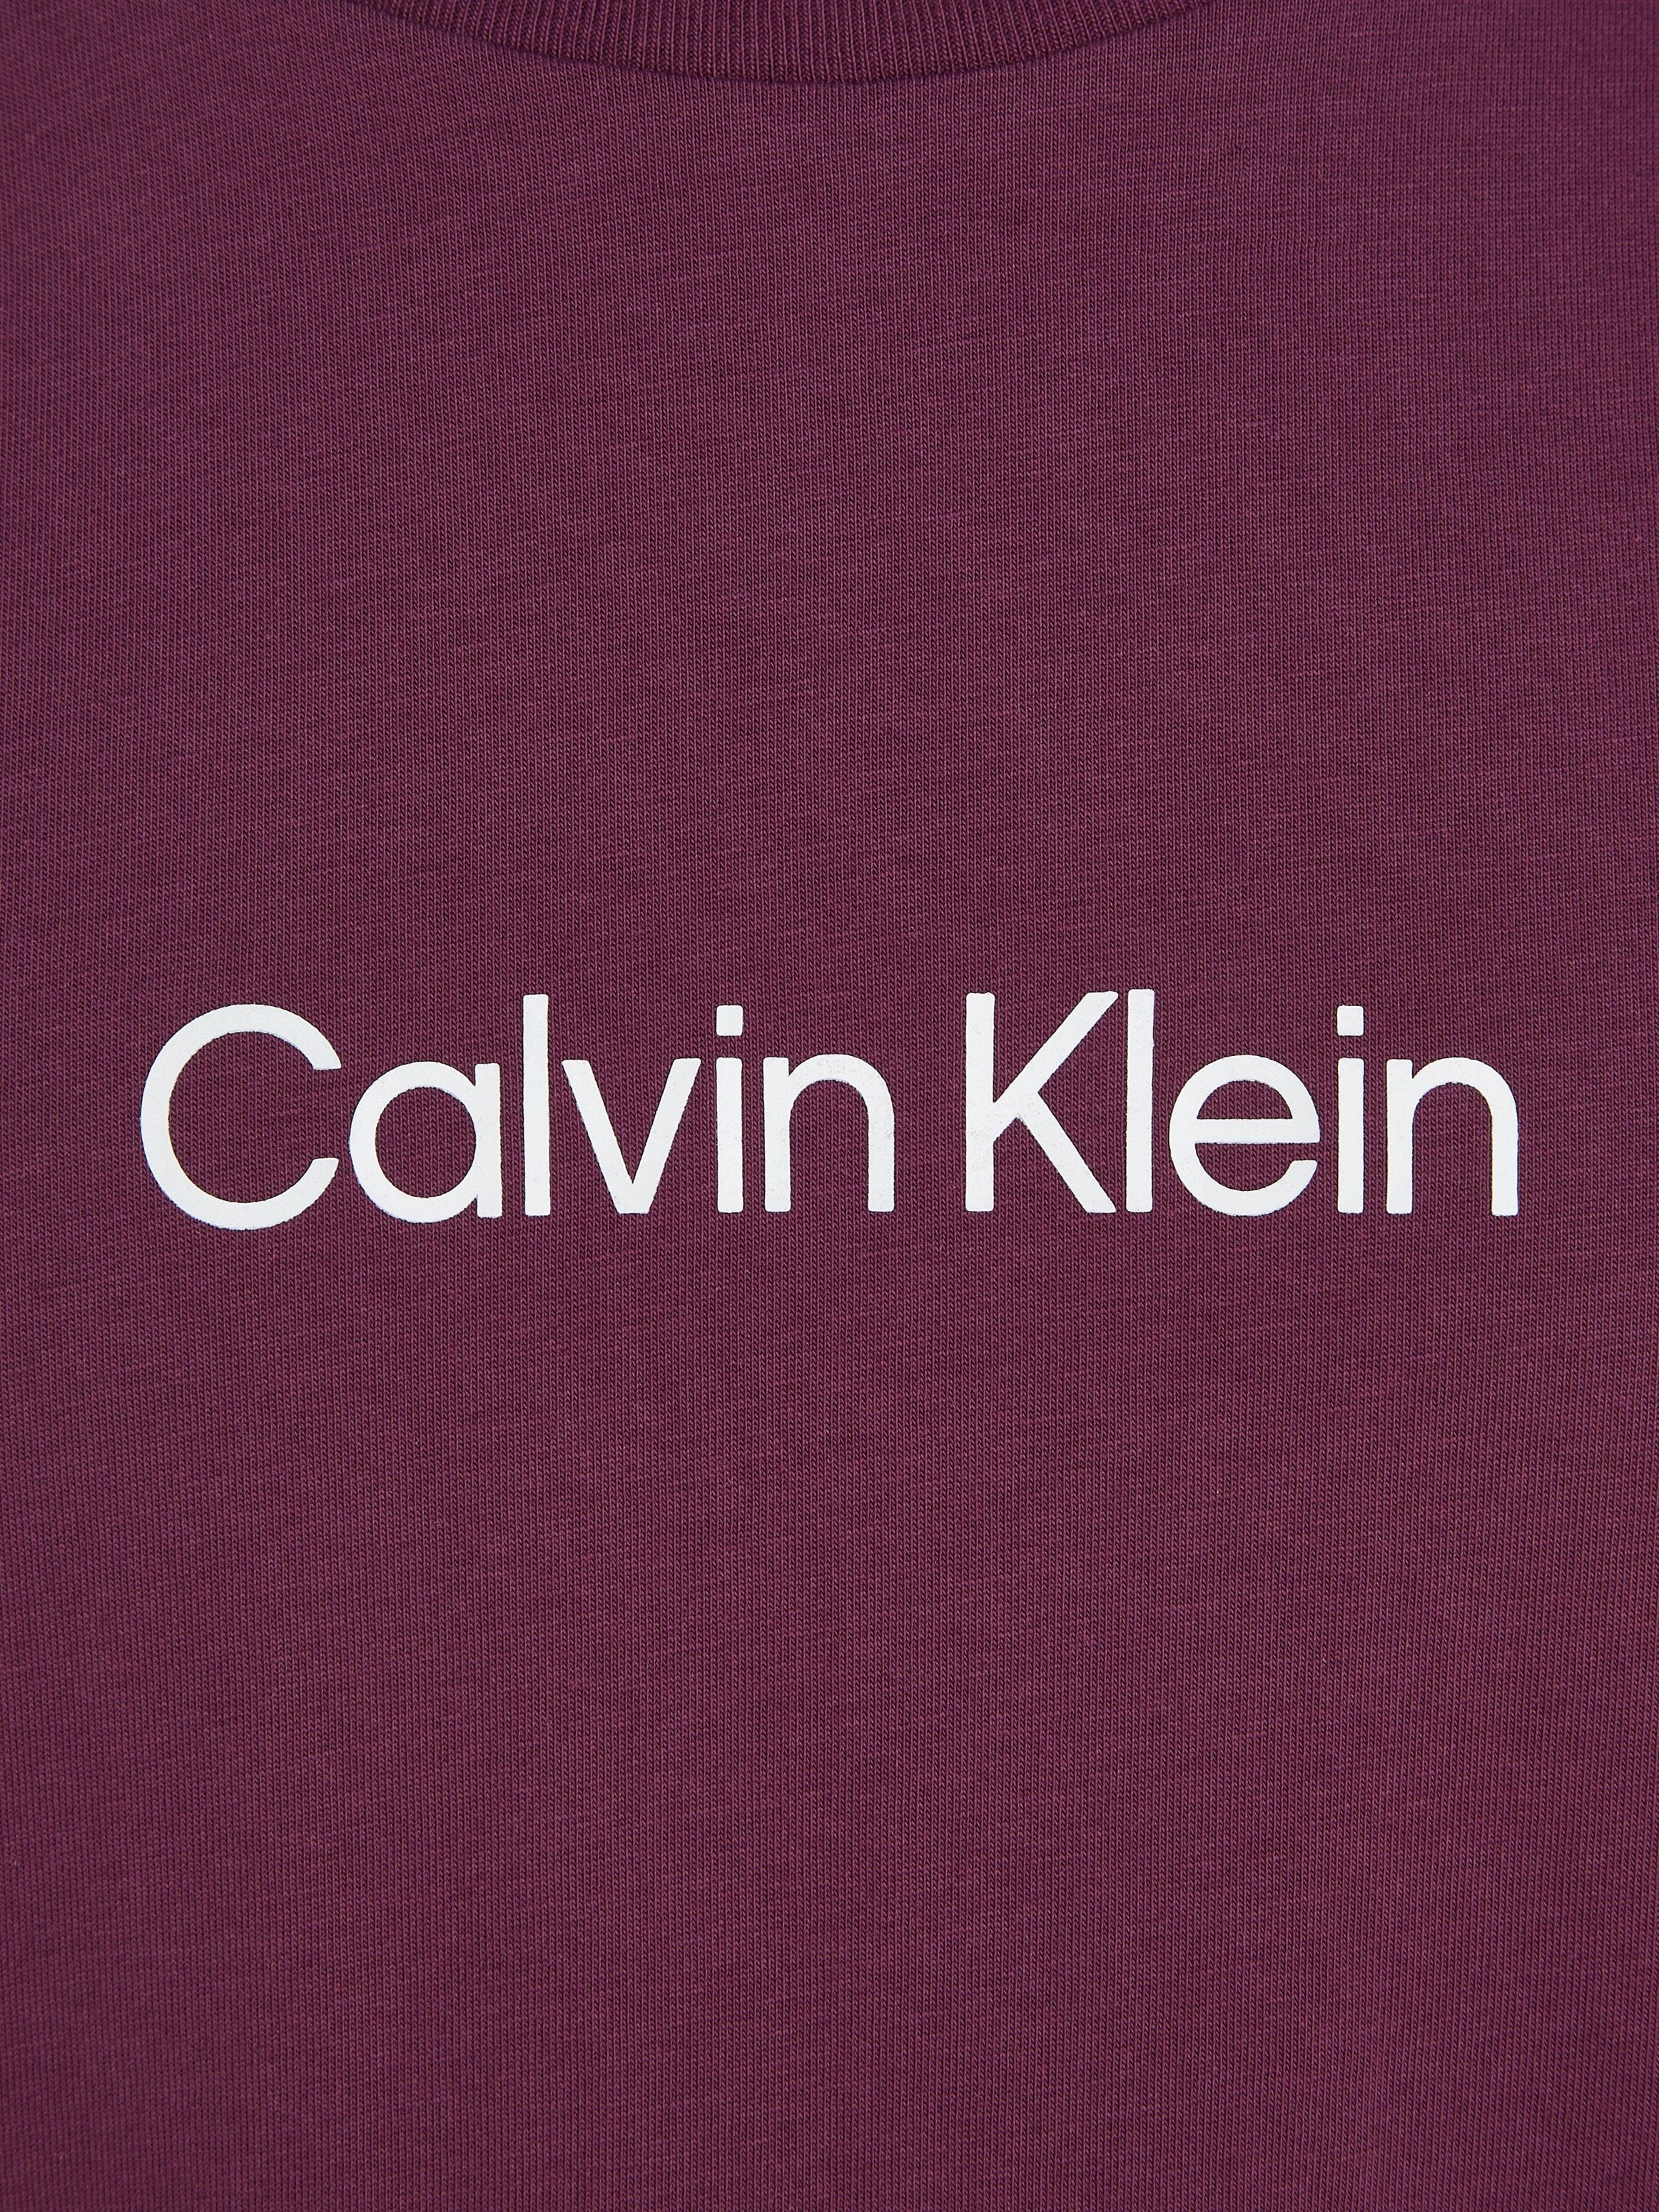 Calvin Klein T-Shirt HERO mit COMFORT aufgedrucktem Markenlabel Plum Italian LOGO T-SHIRT